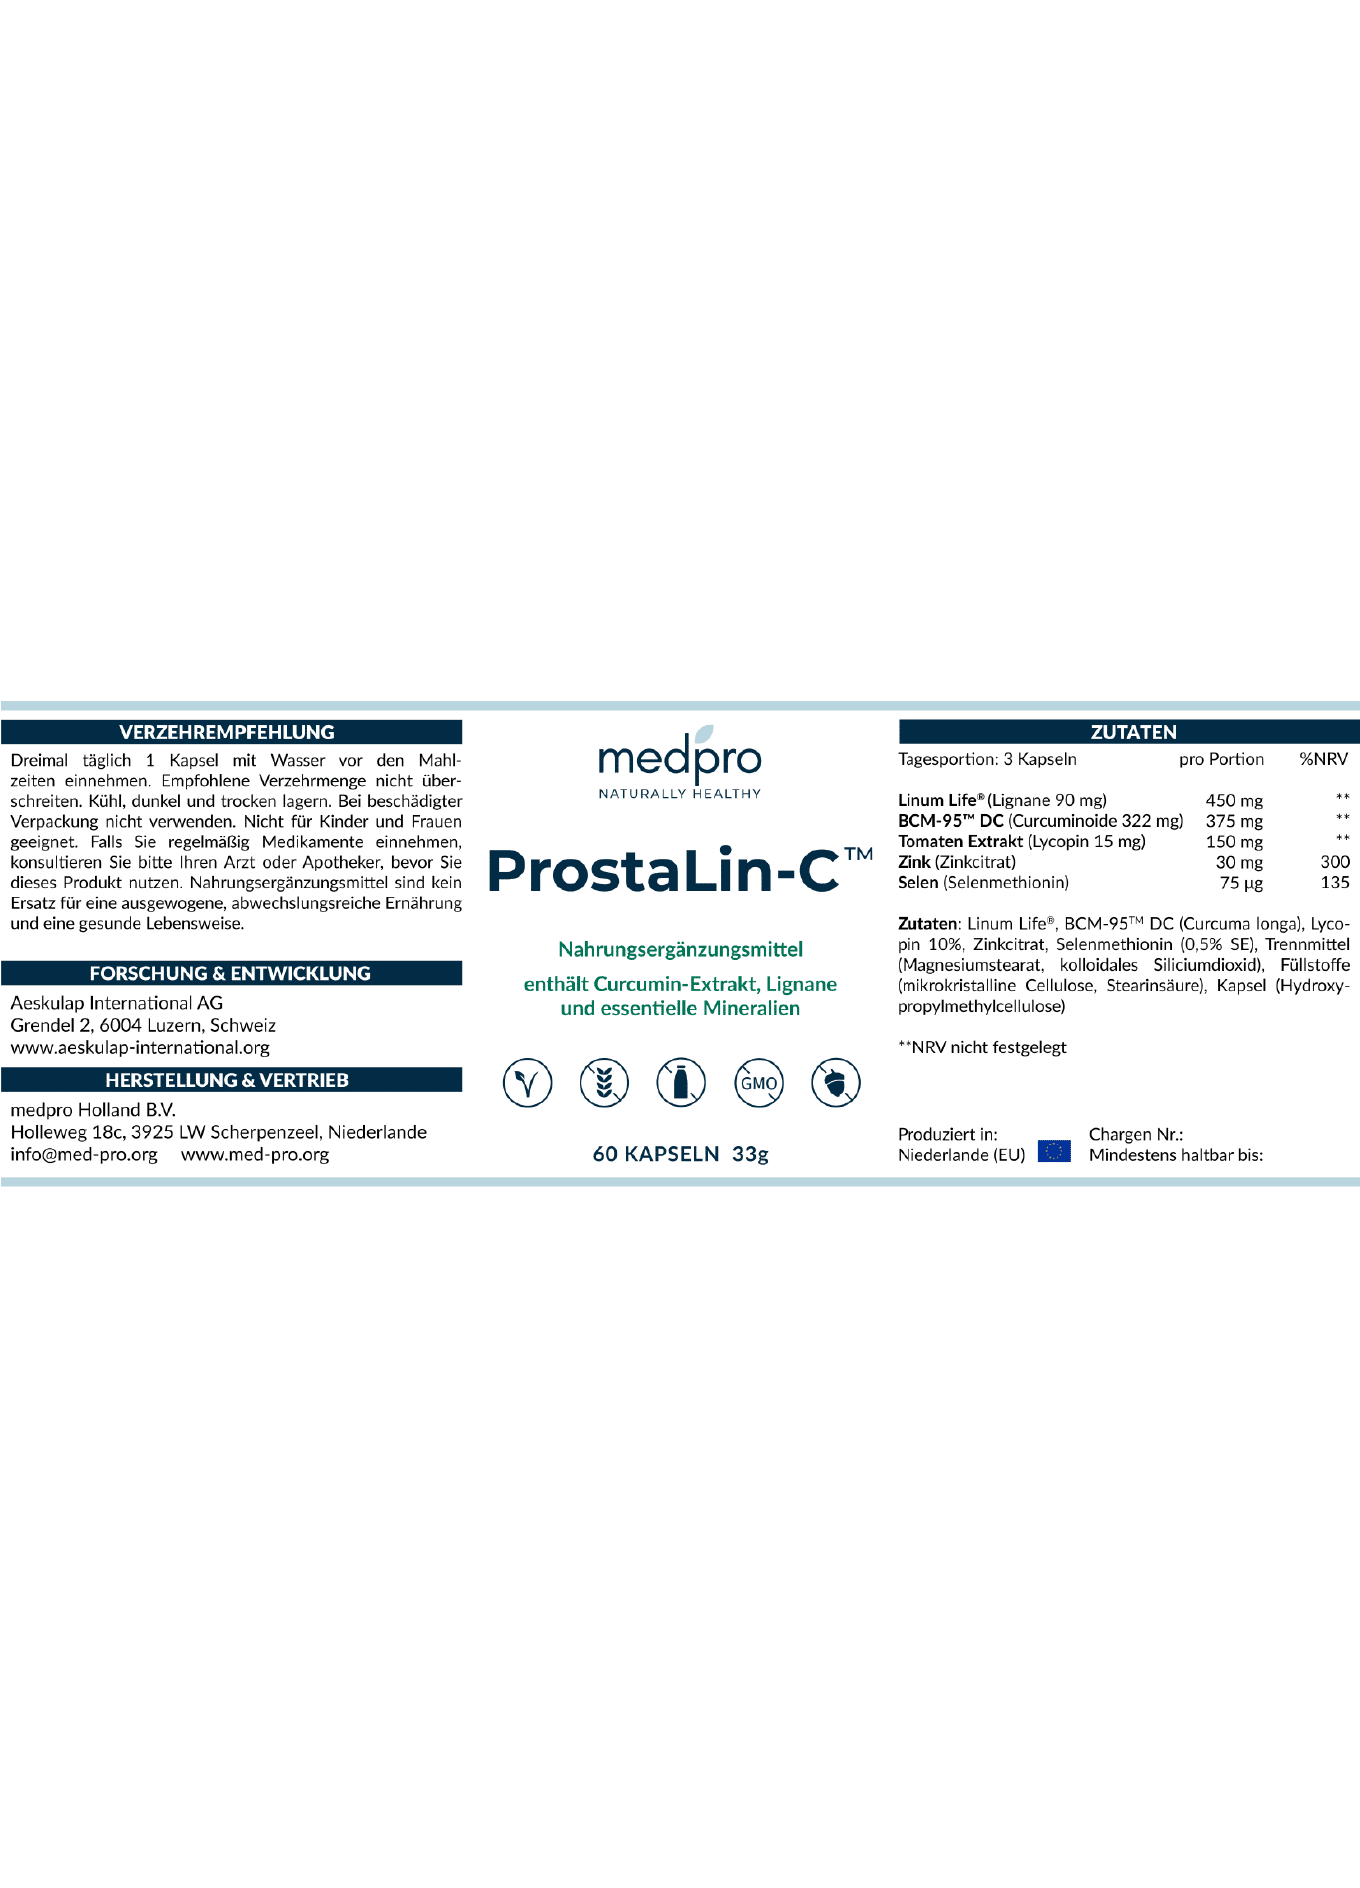 ProstalinC label